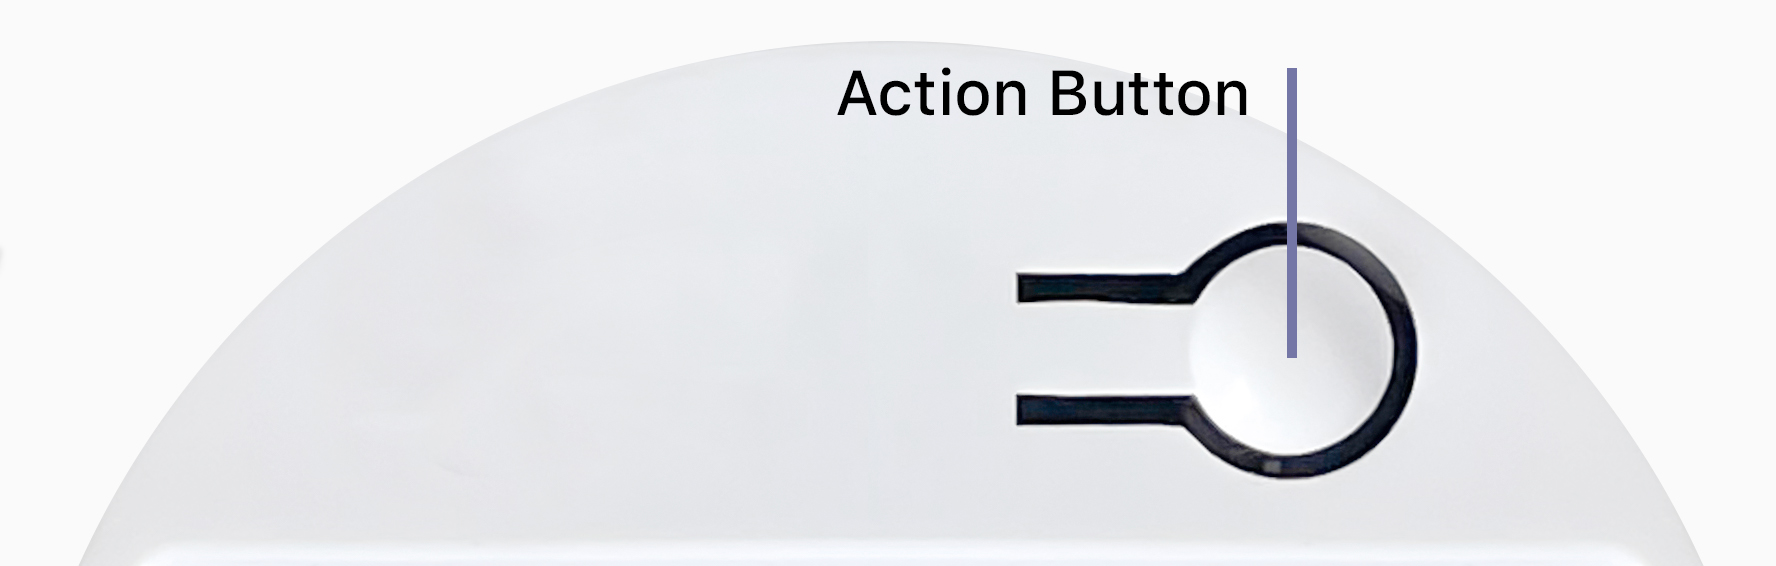 Atrim OmniSensor action button